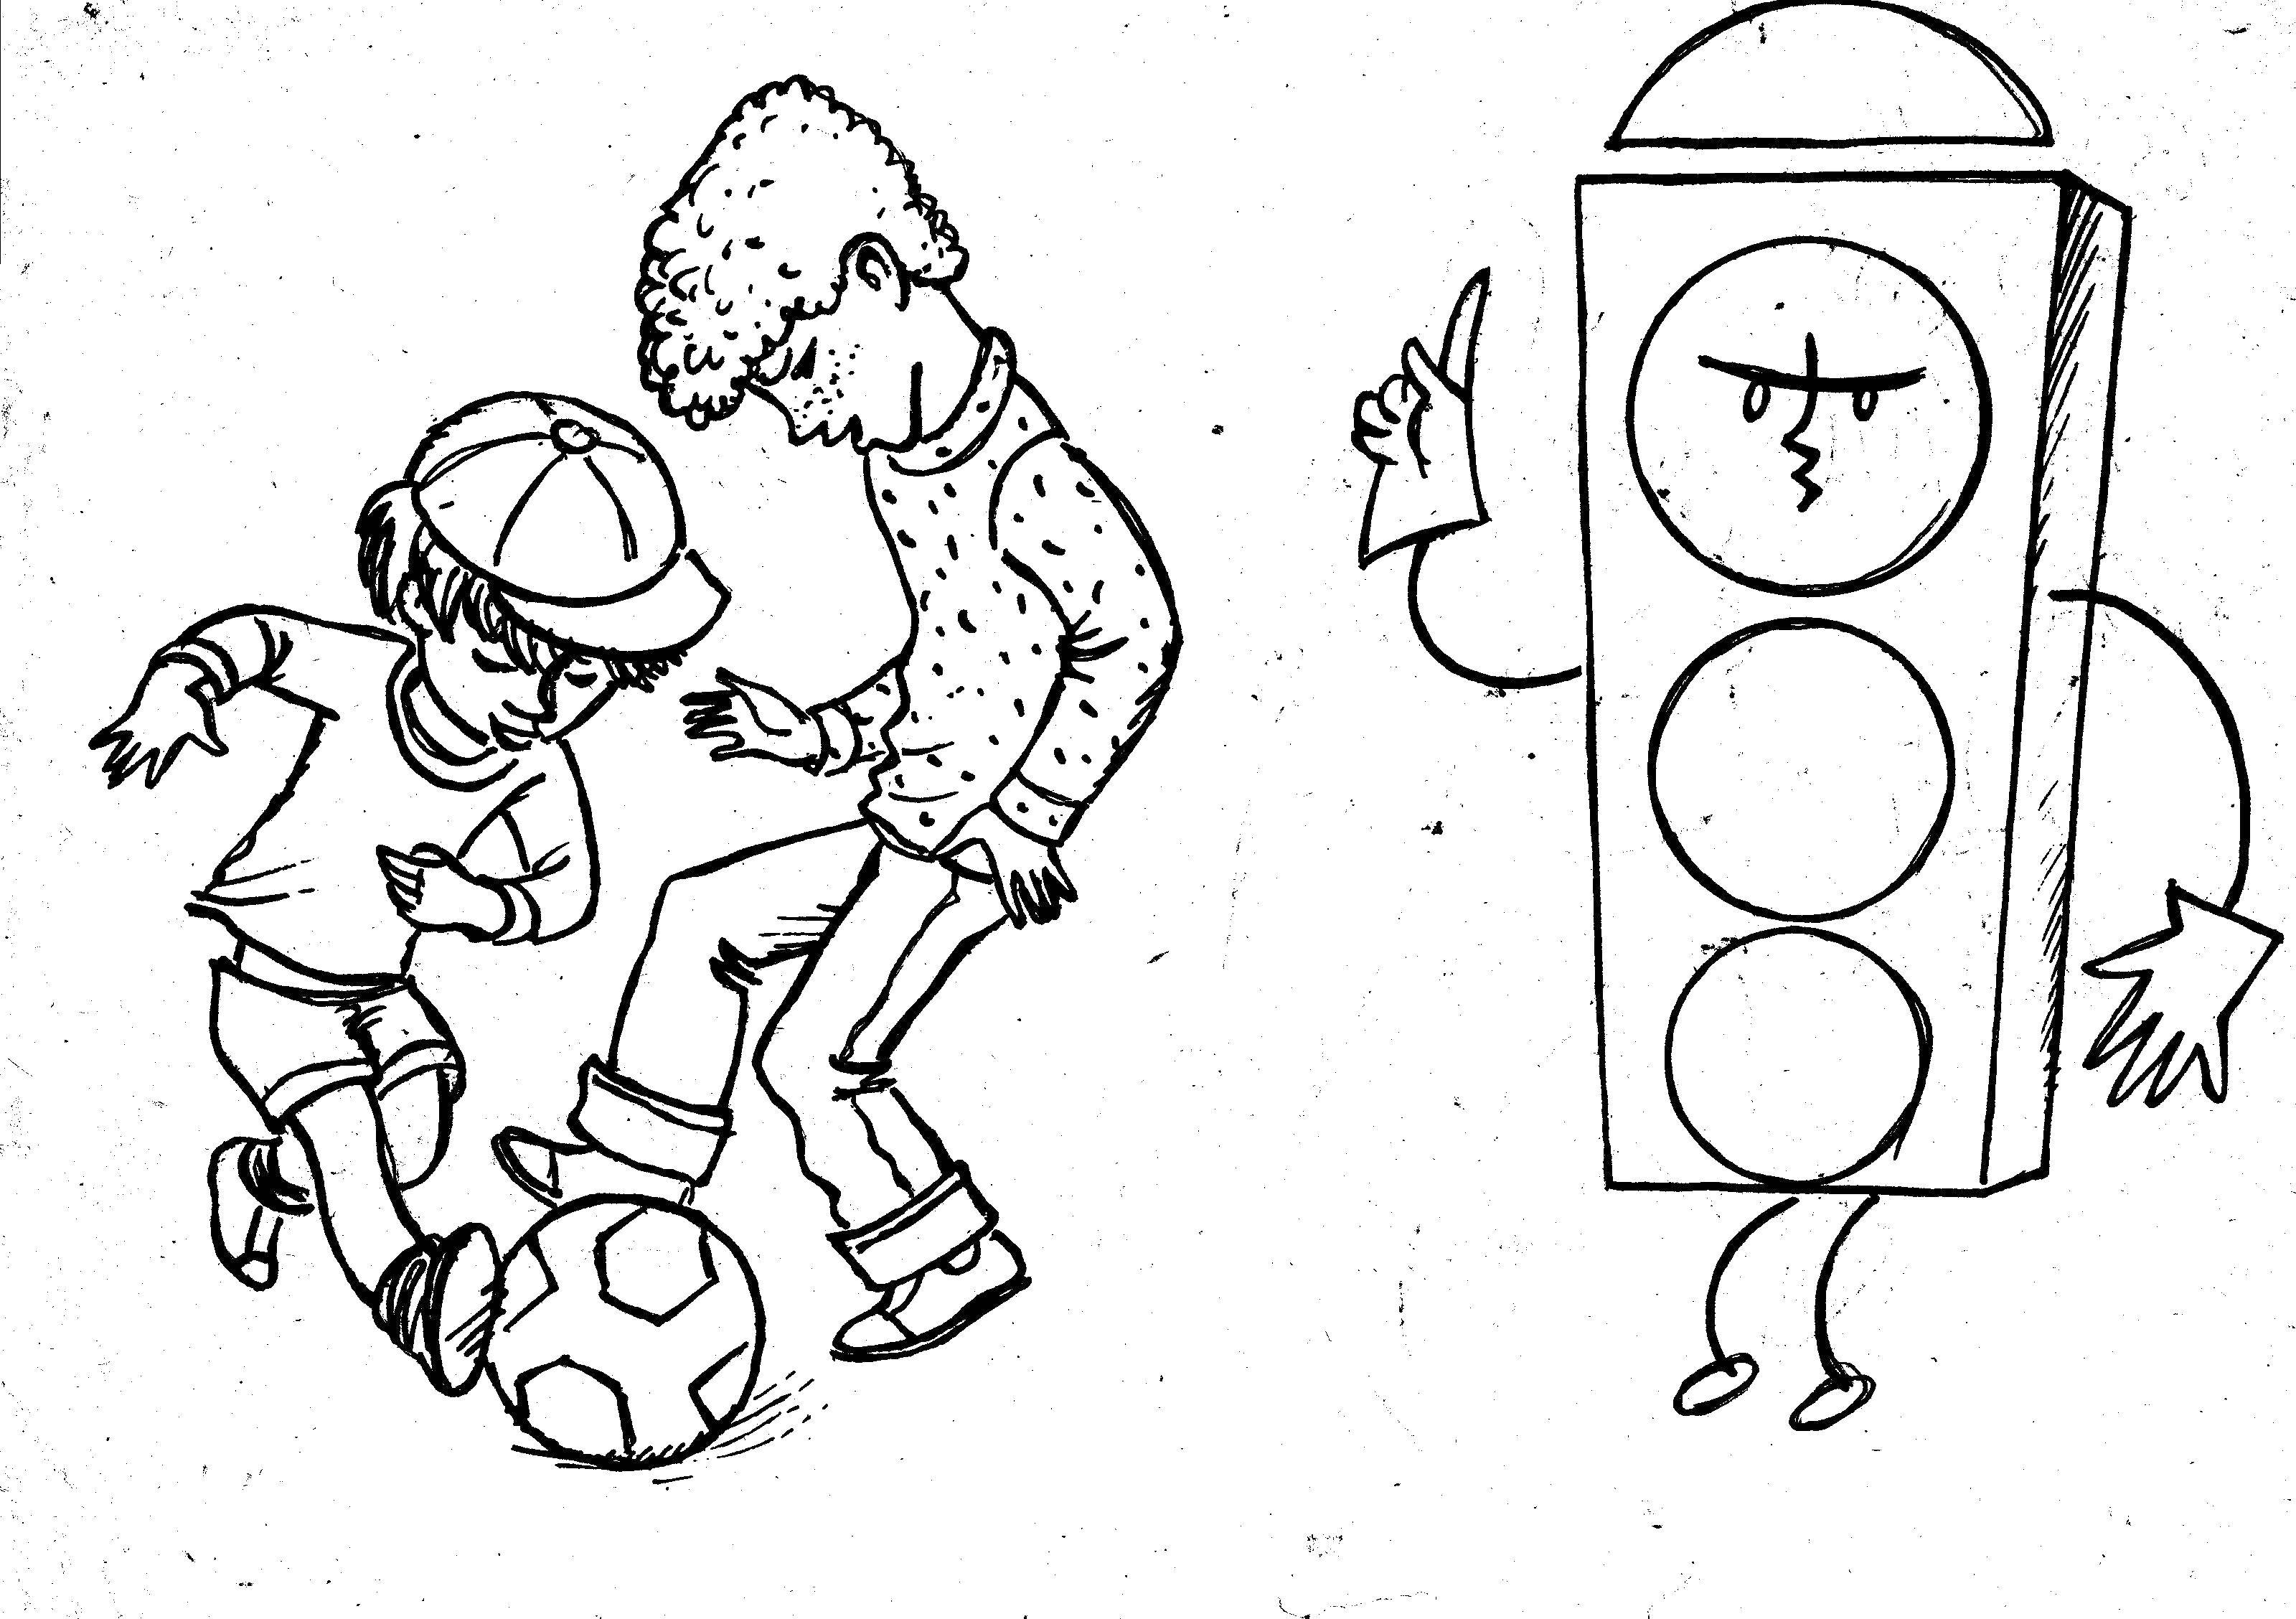 Название: Раскраска Дети играют в футбол на дороге. Категория: светофор. Теги: светофор, машина, дорога.